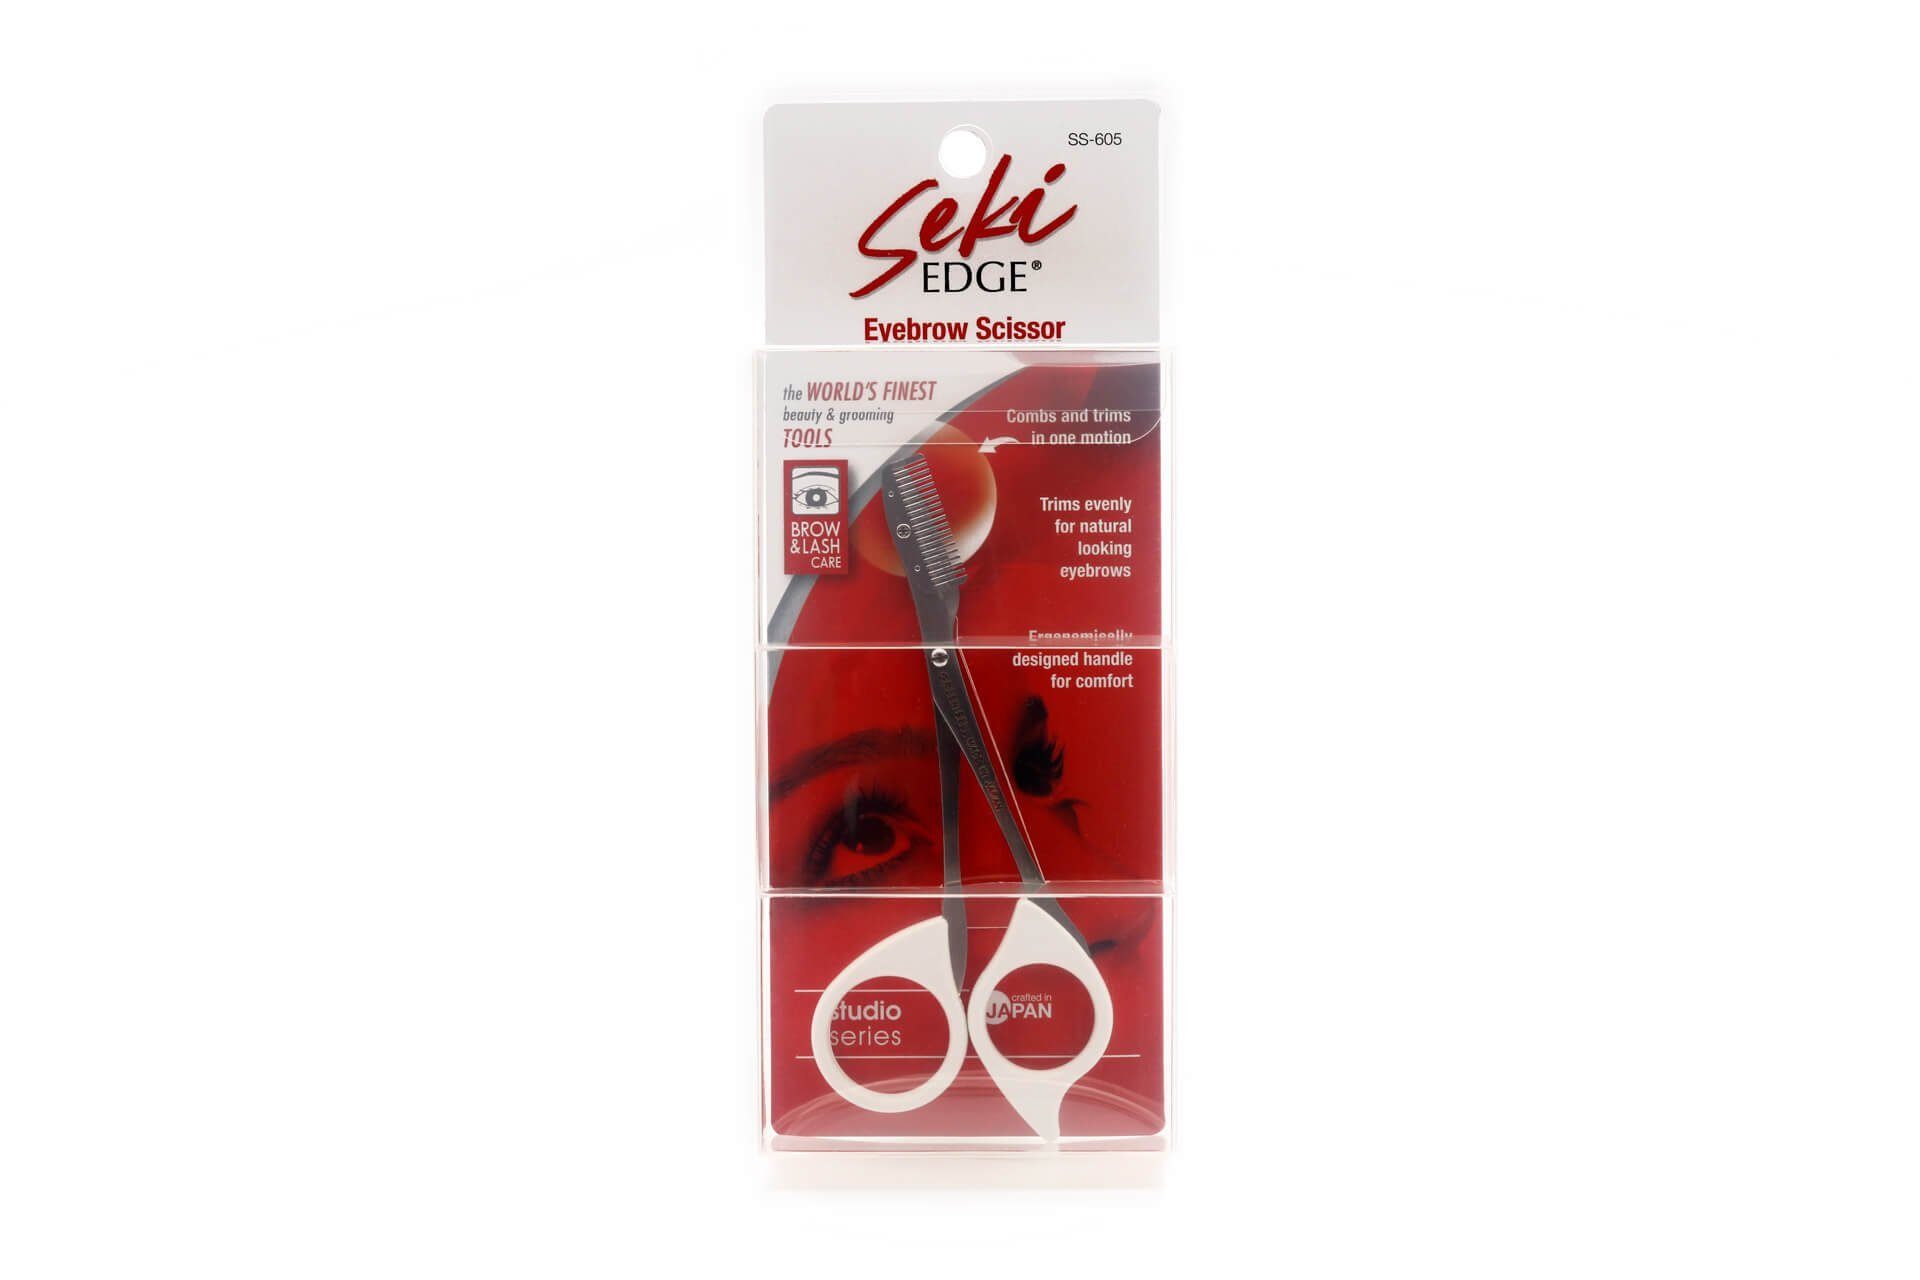 Seki EDGE Augenbrauenschere mit Japan handgeschärftes aus Augenbrauen-Trimmer Qualitätsprodukt 5.3x12x0.6 SS-605 Kamm cm